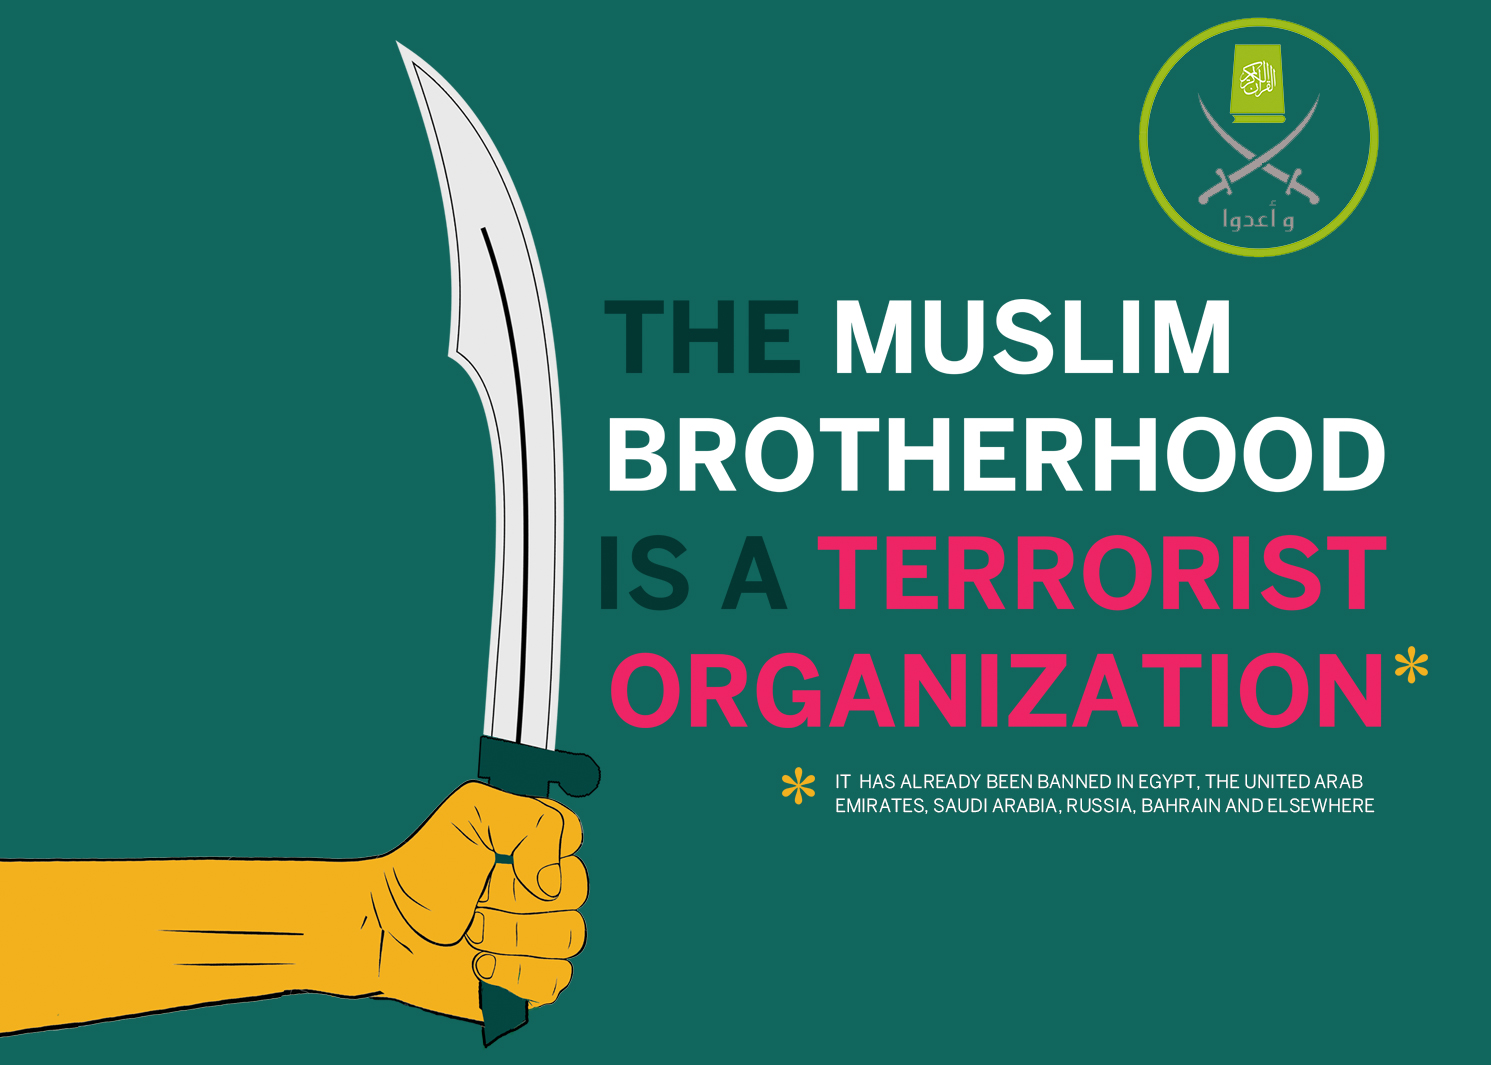 Muslim Brotherhood’s Long-Standing War On The West (1)